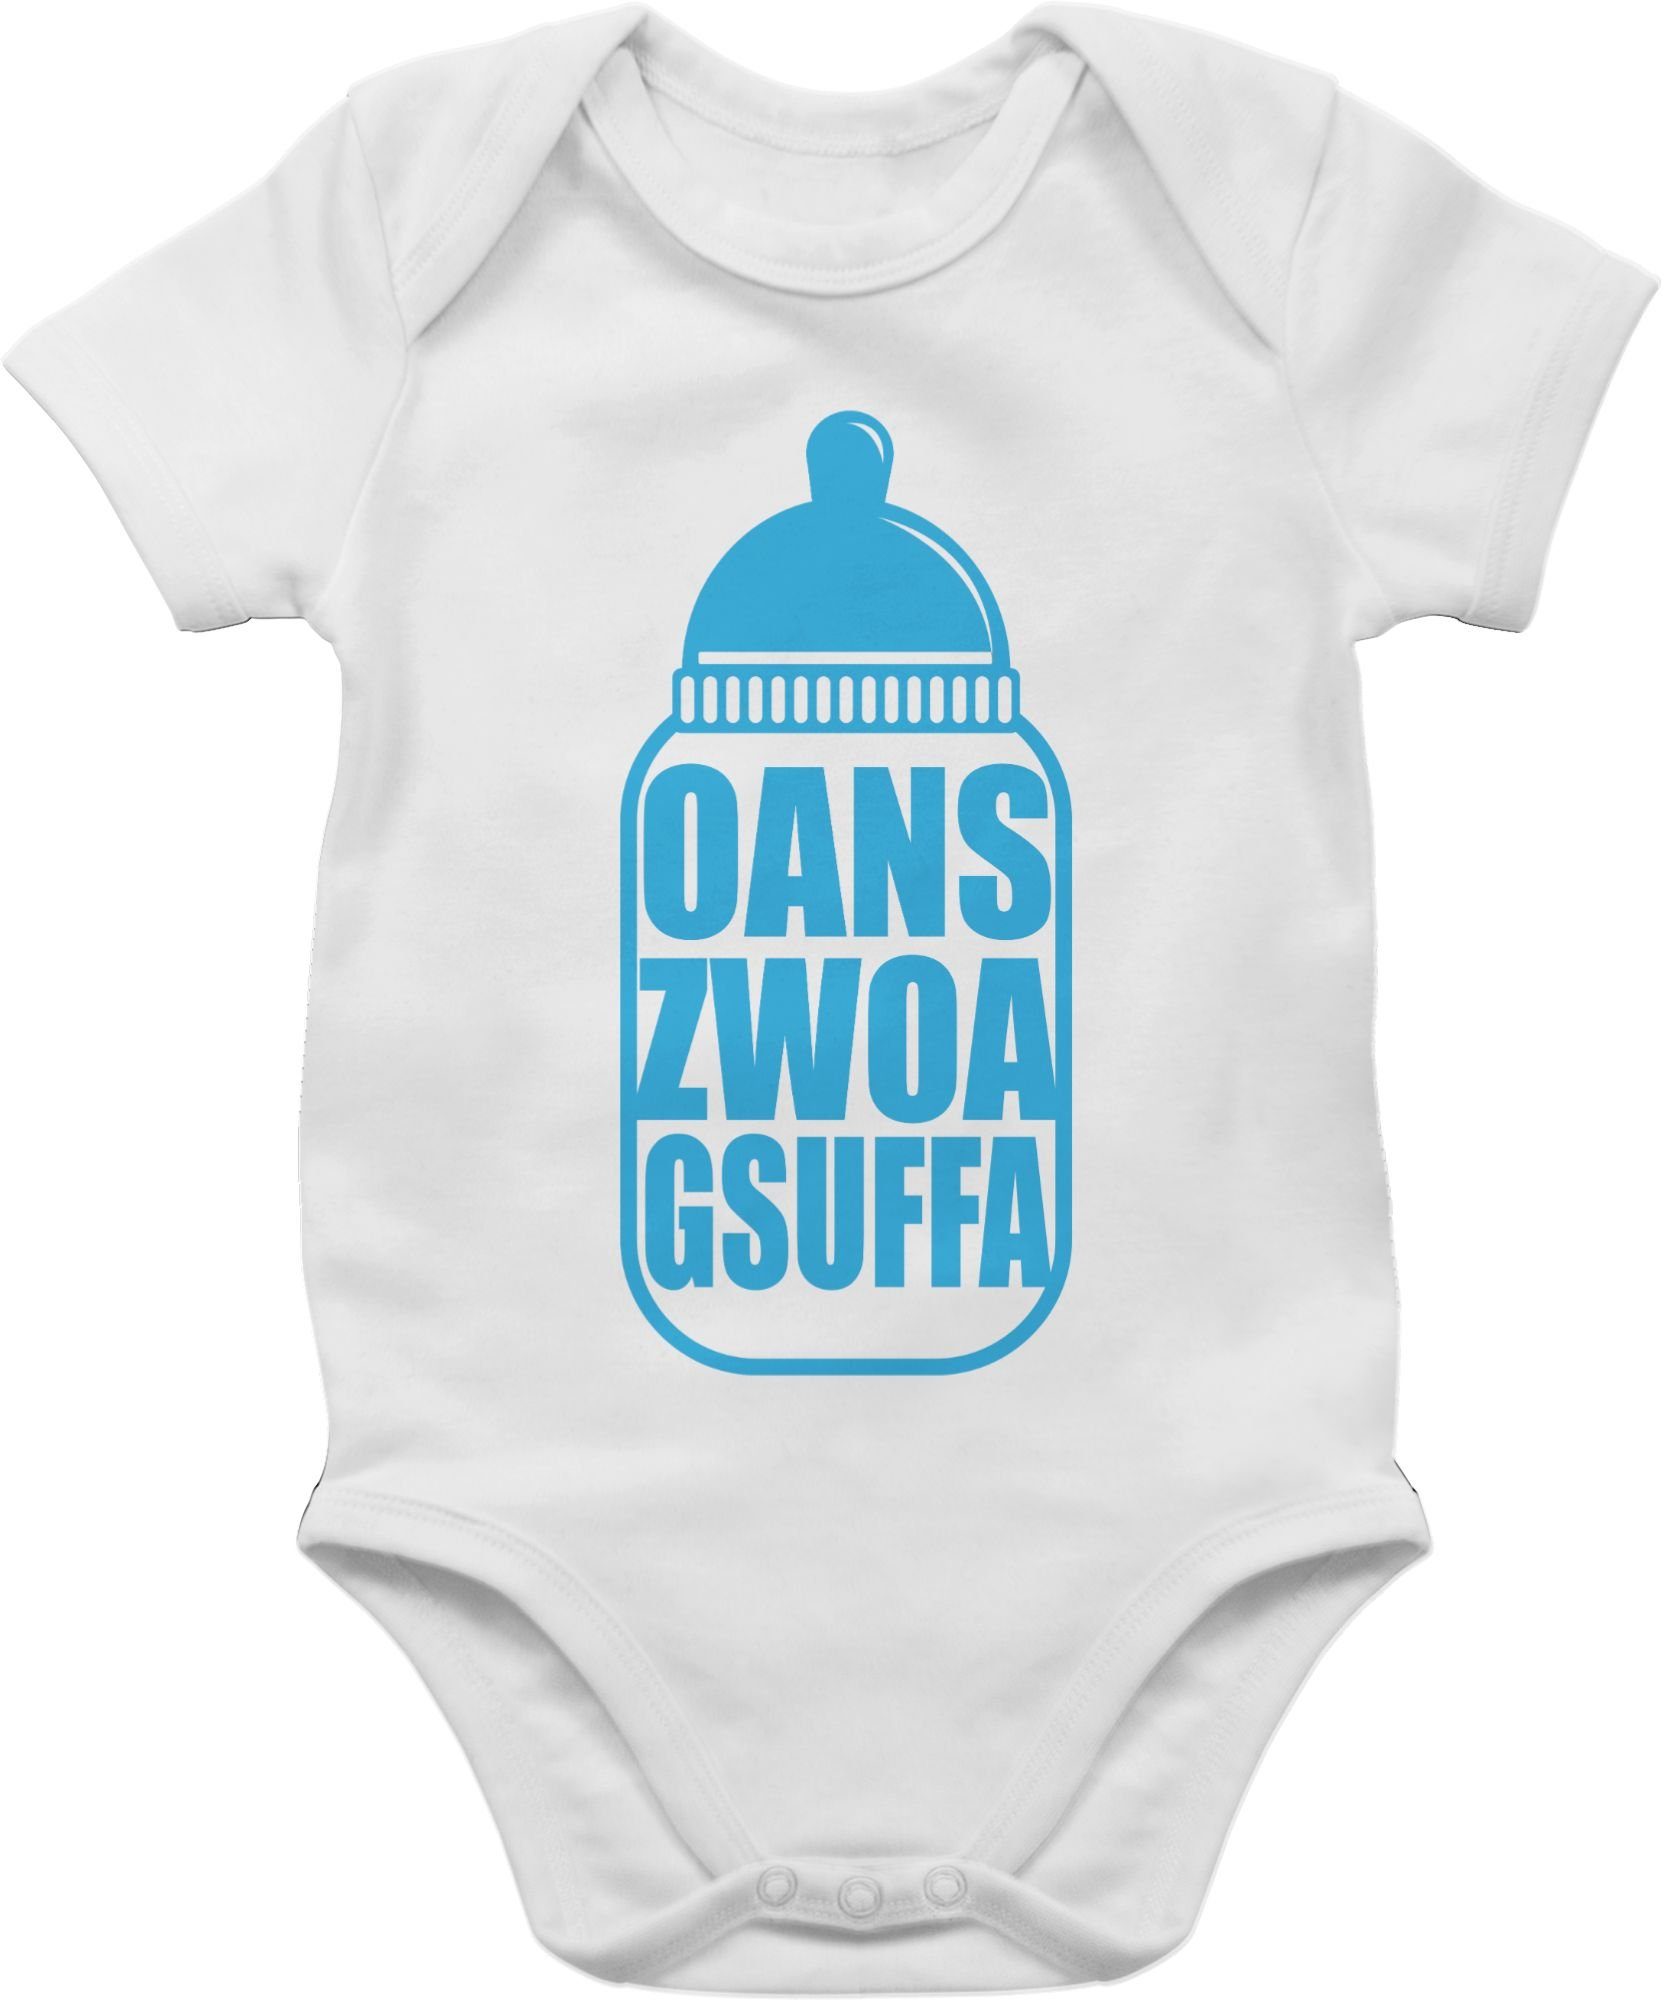 für Gsuffa Zwoa Babyflasche Oans blau Outfit Mode 1 Oktoberfest Shirtbody Baby Weiß Shirtracer